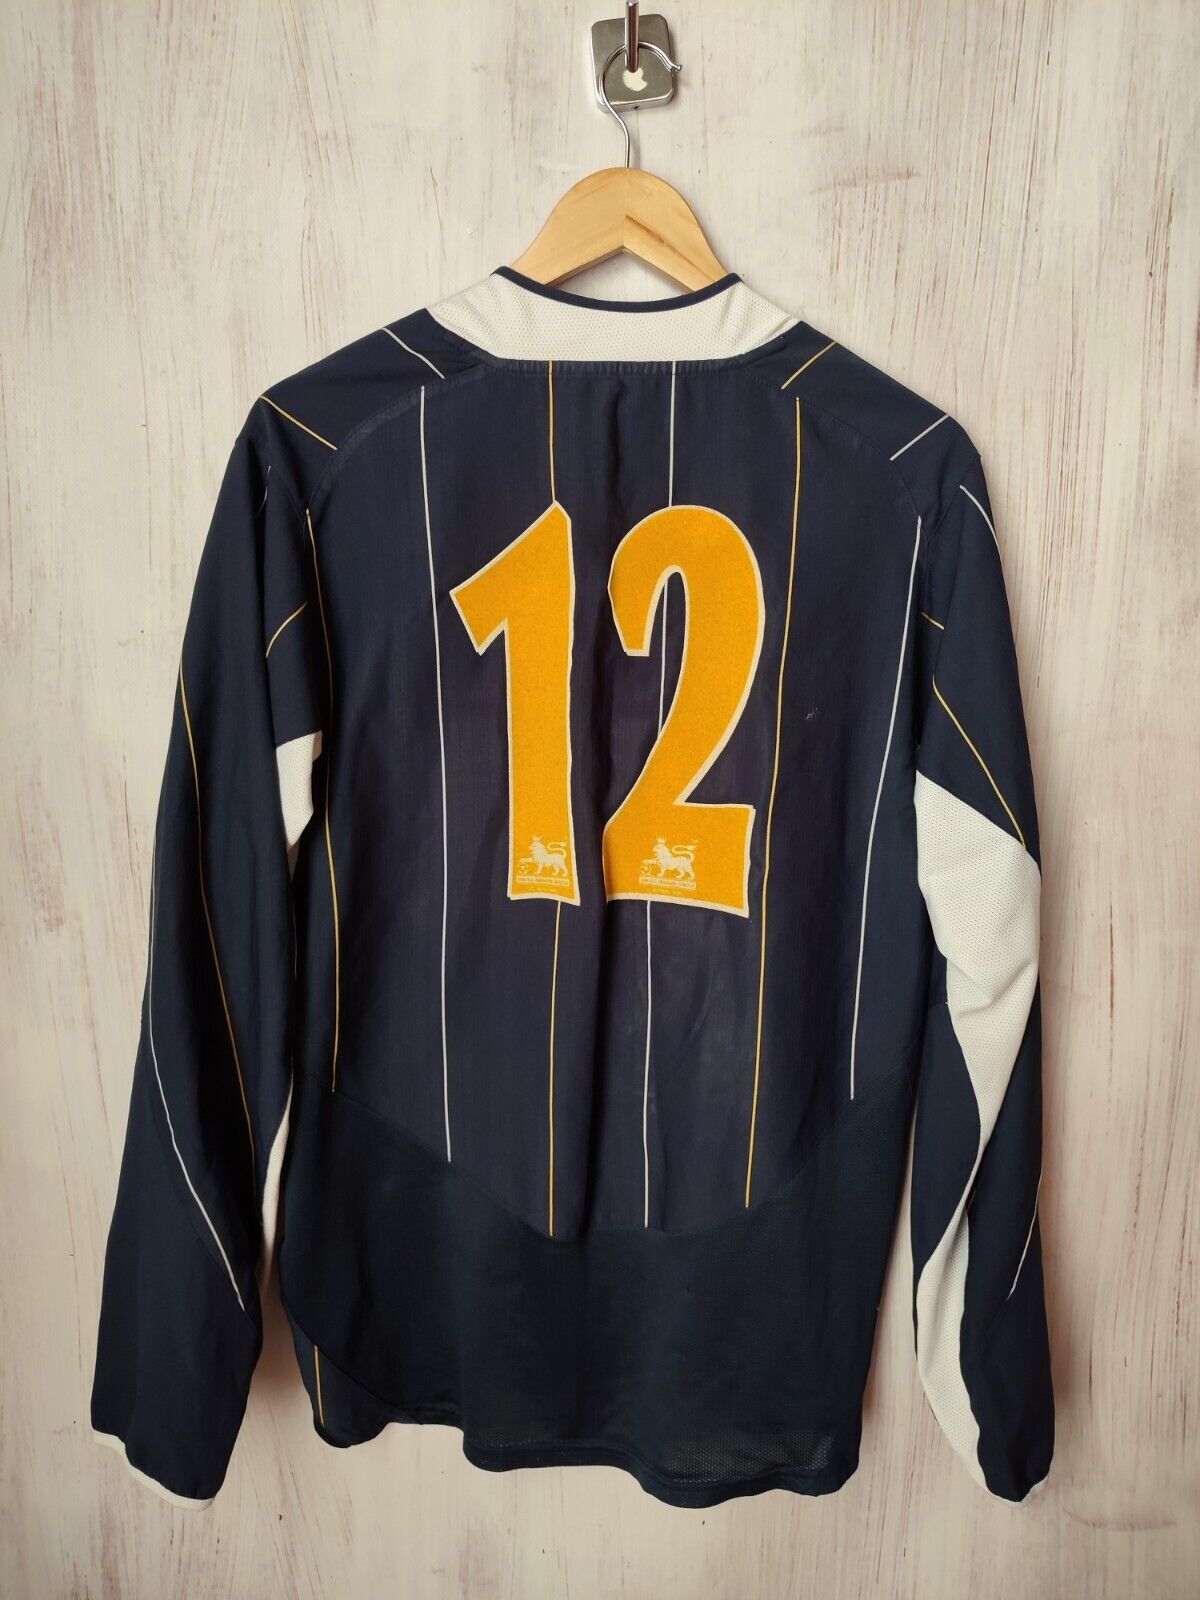 Leeds United 2003 2004 away Size M Nike jersey shirt soccer football kit vintage